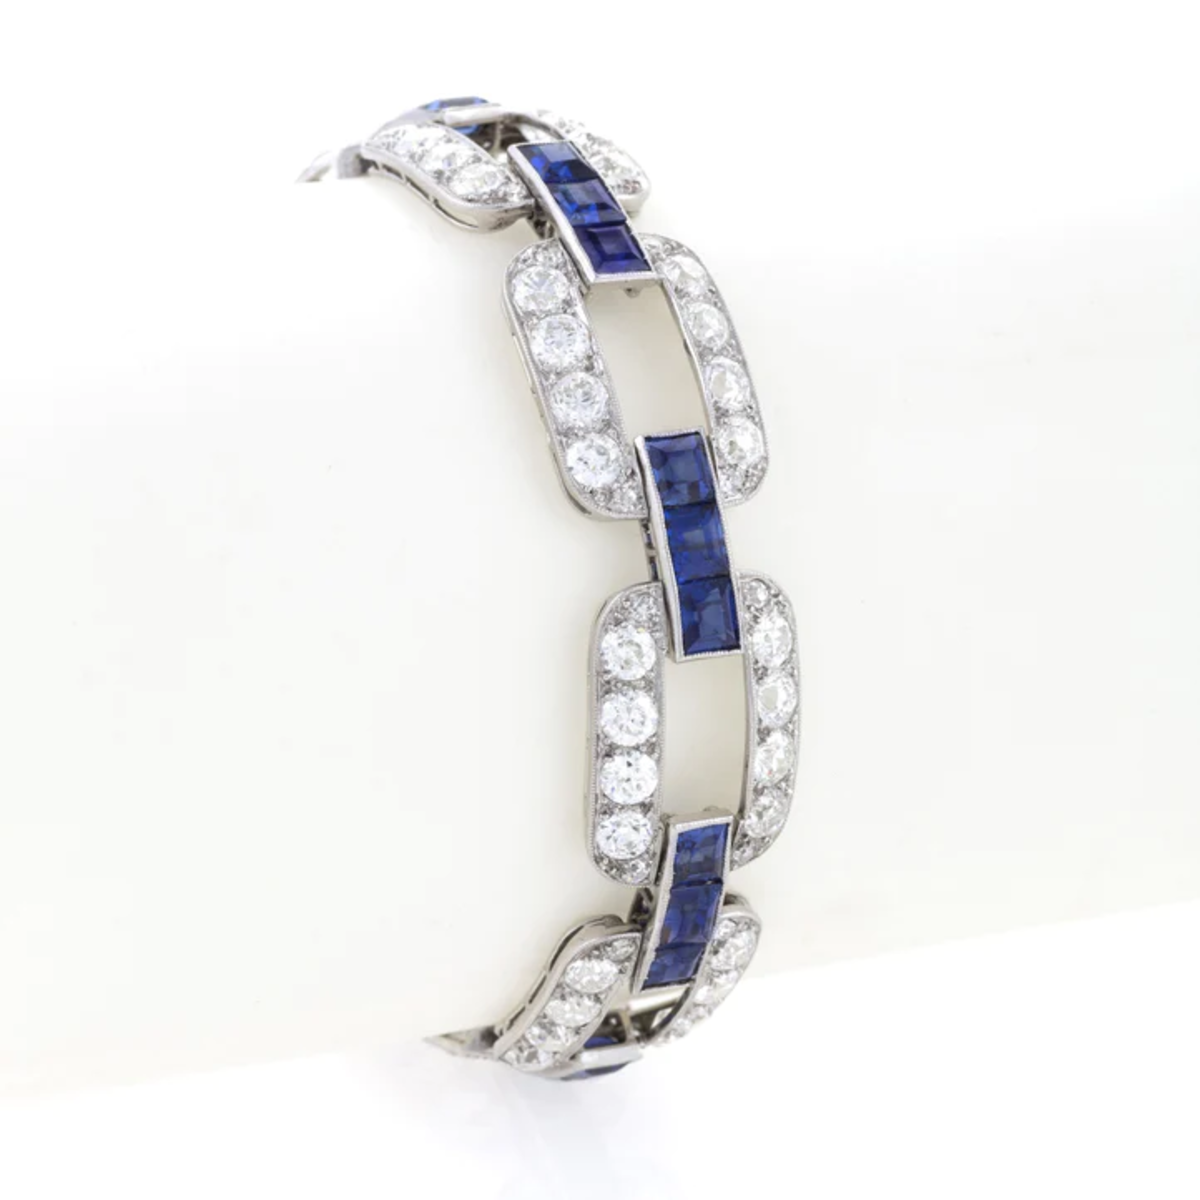 1930s Platinum Sapphire & Diamond Link Bracelet on wrist form